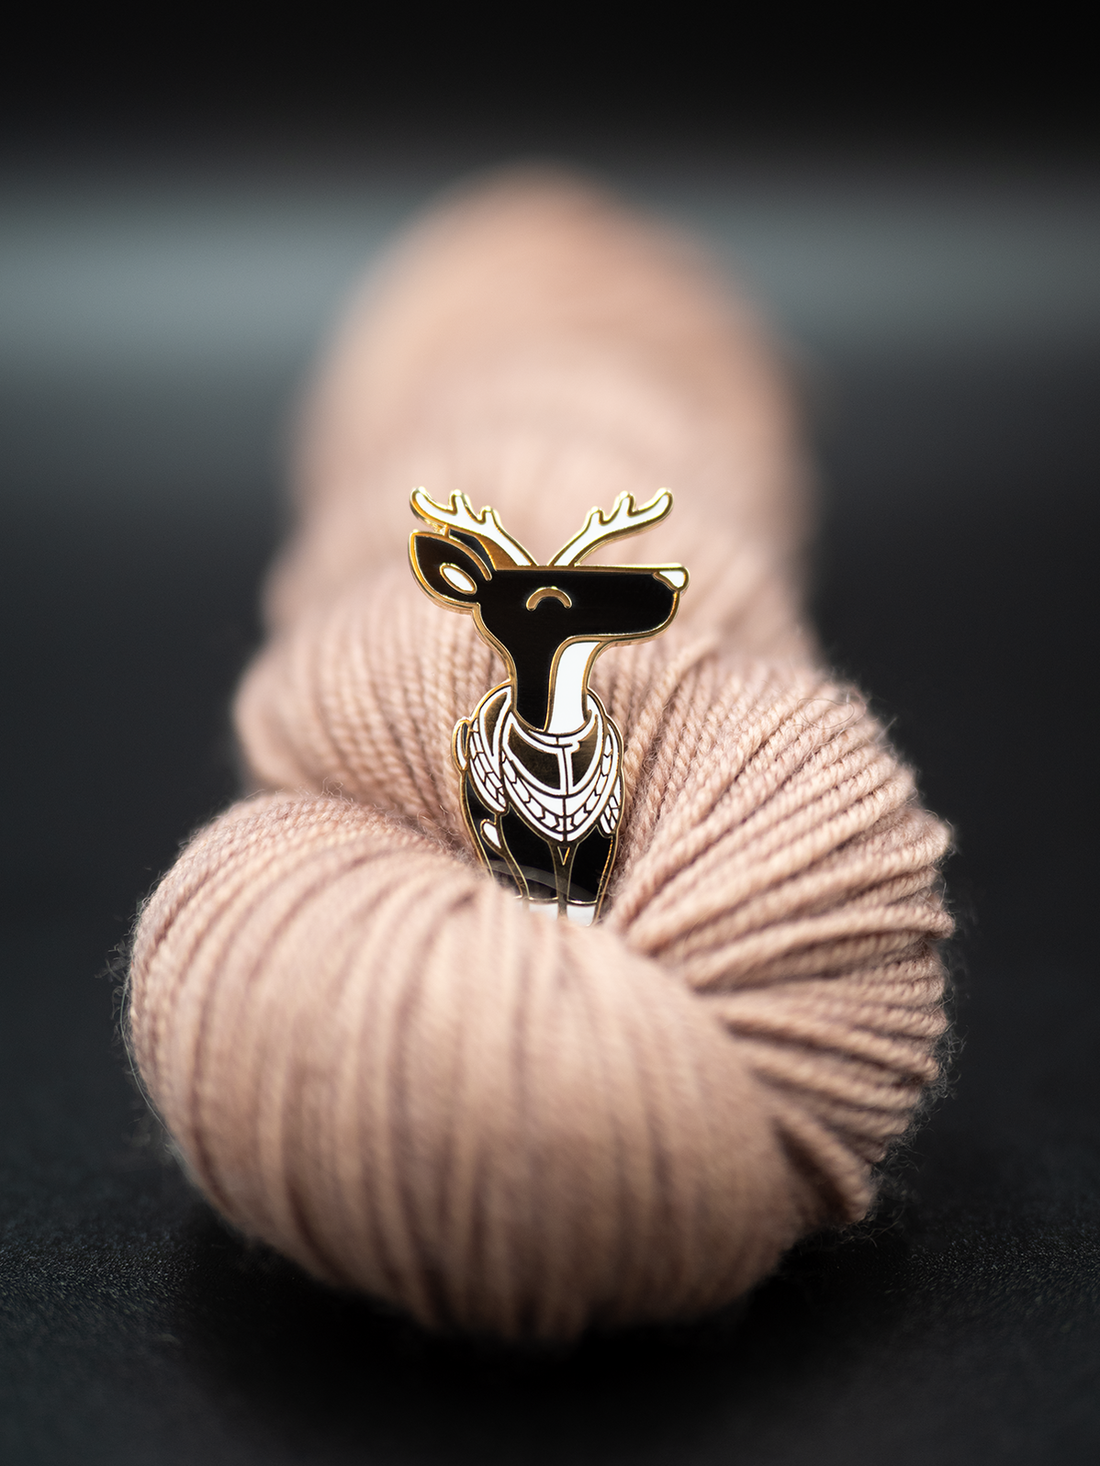 Jill the White-Tailed Deer (enamel pin)